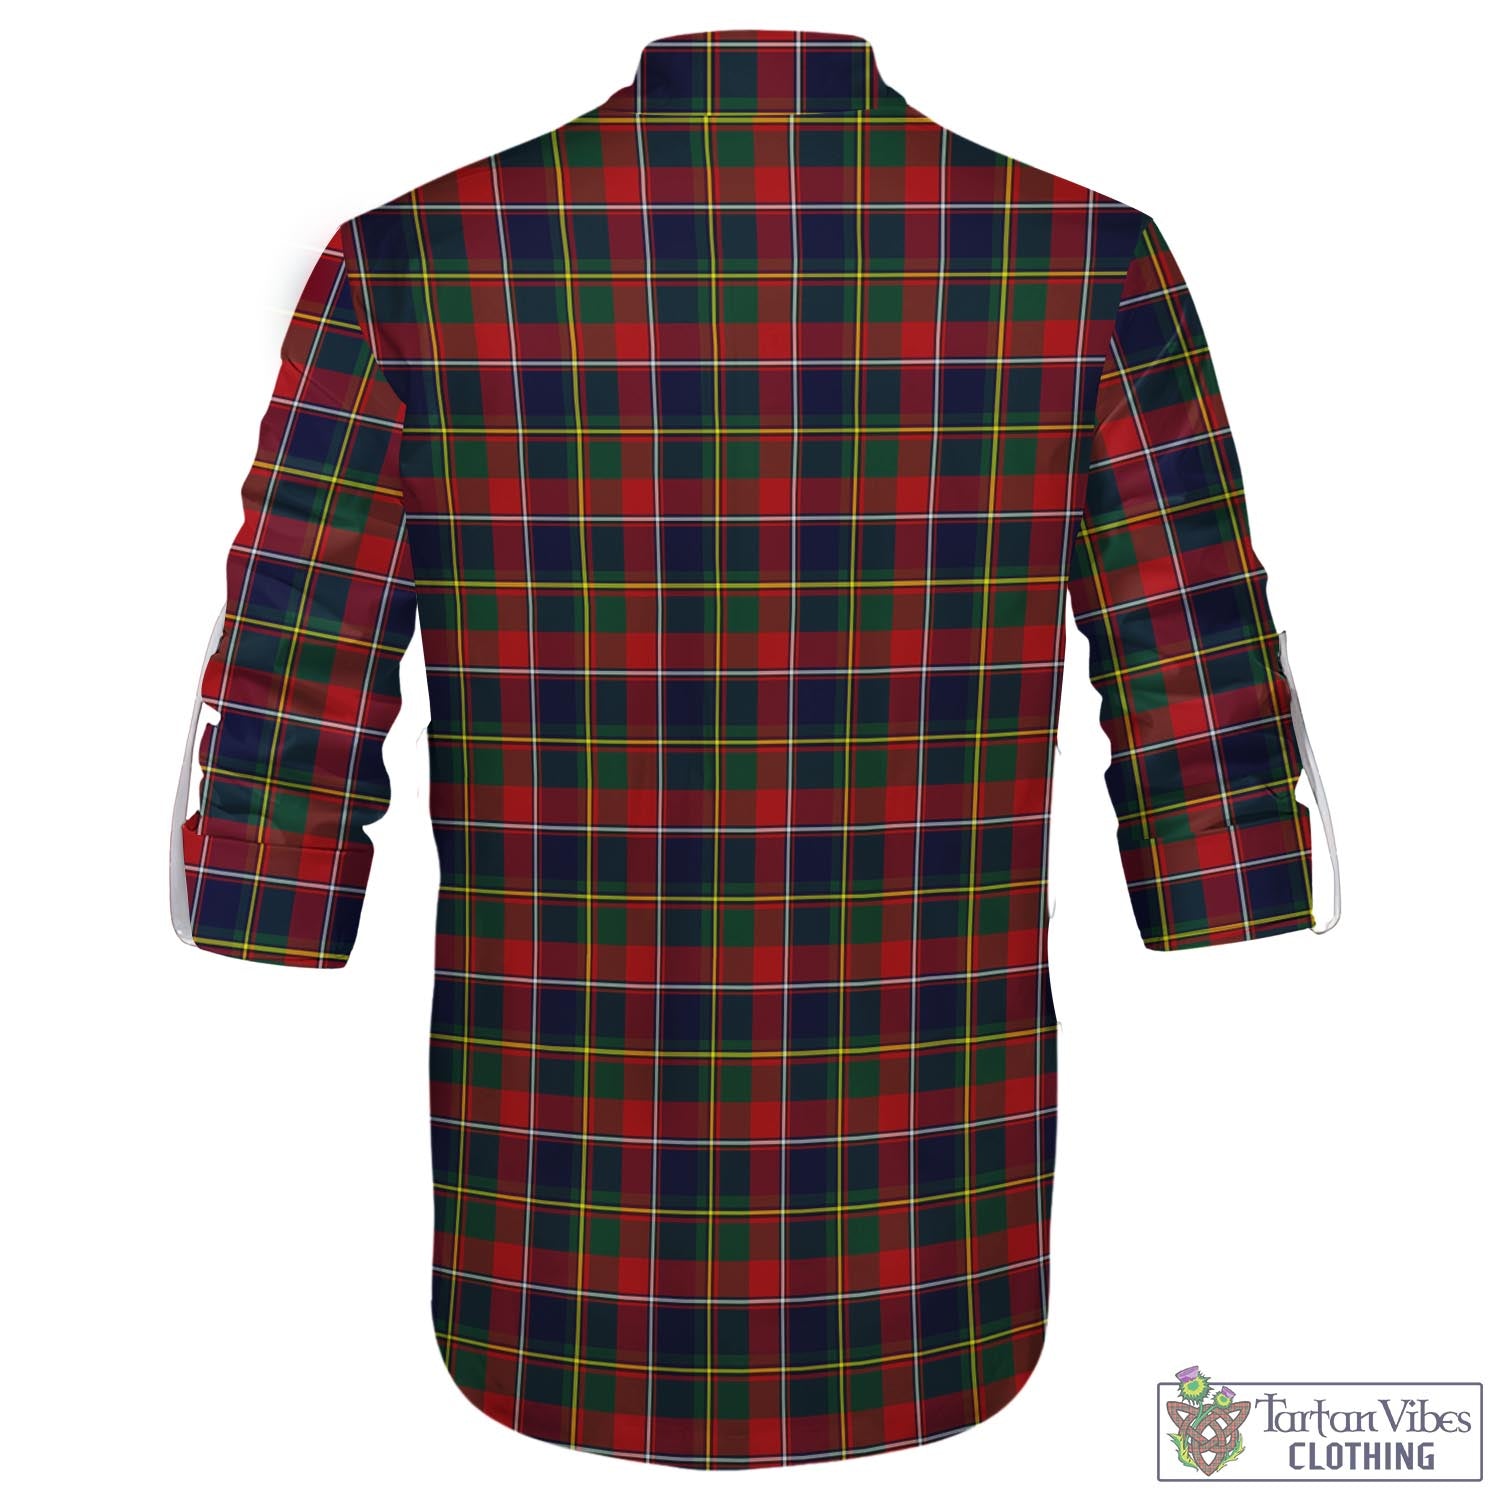 Tartan Vibes Clothing Quebec Province Canada Tartan Men's Scottish Traditional Jacobite Ghillie Kilt Shirt